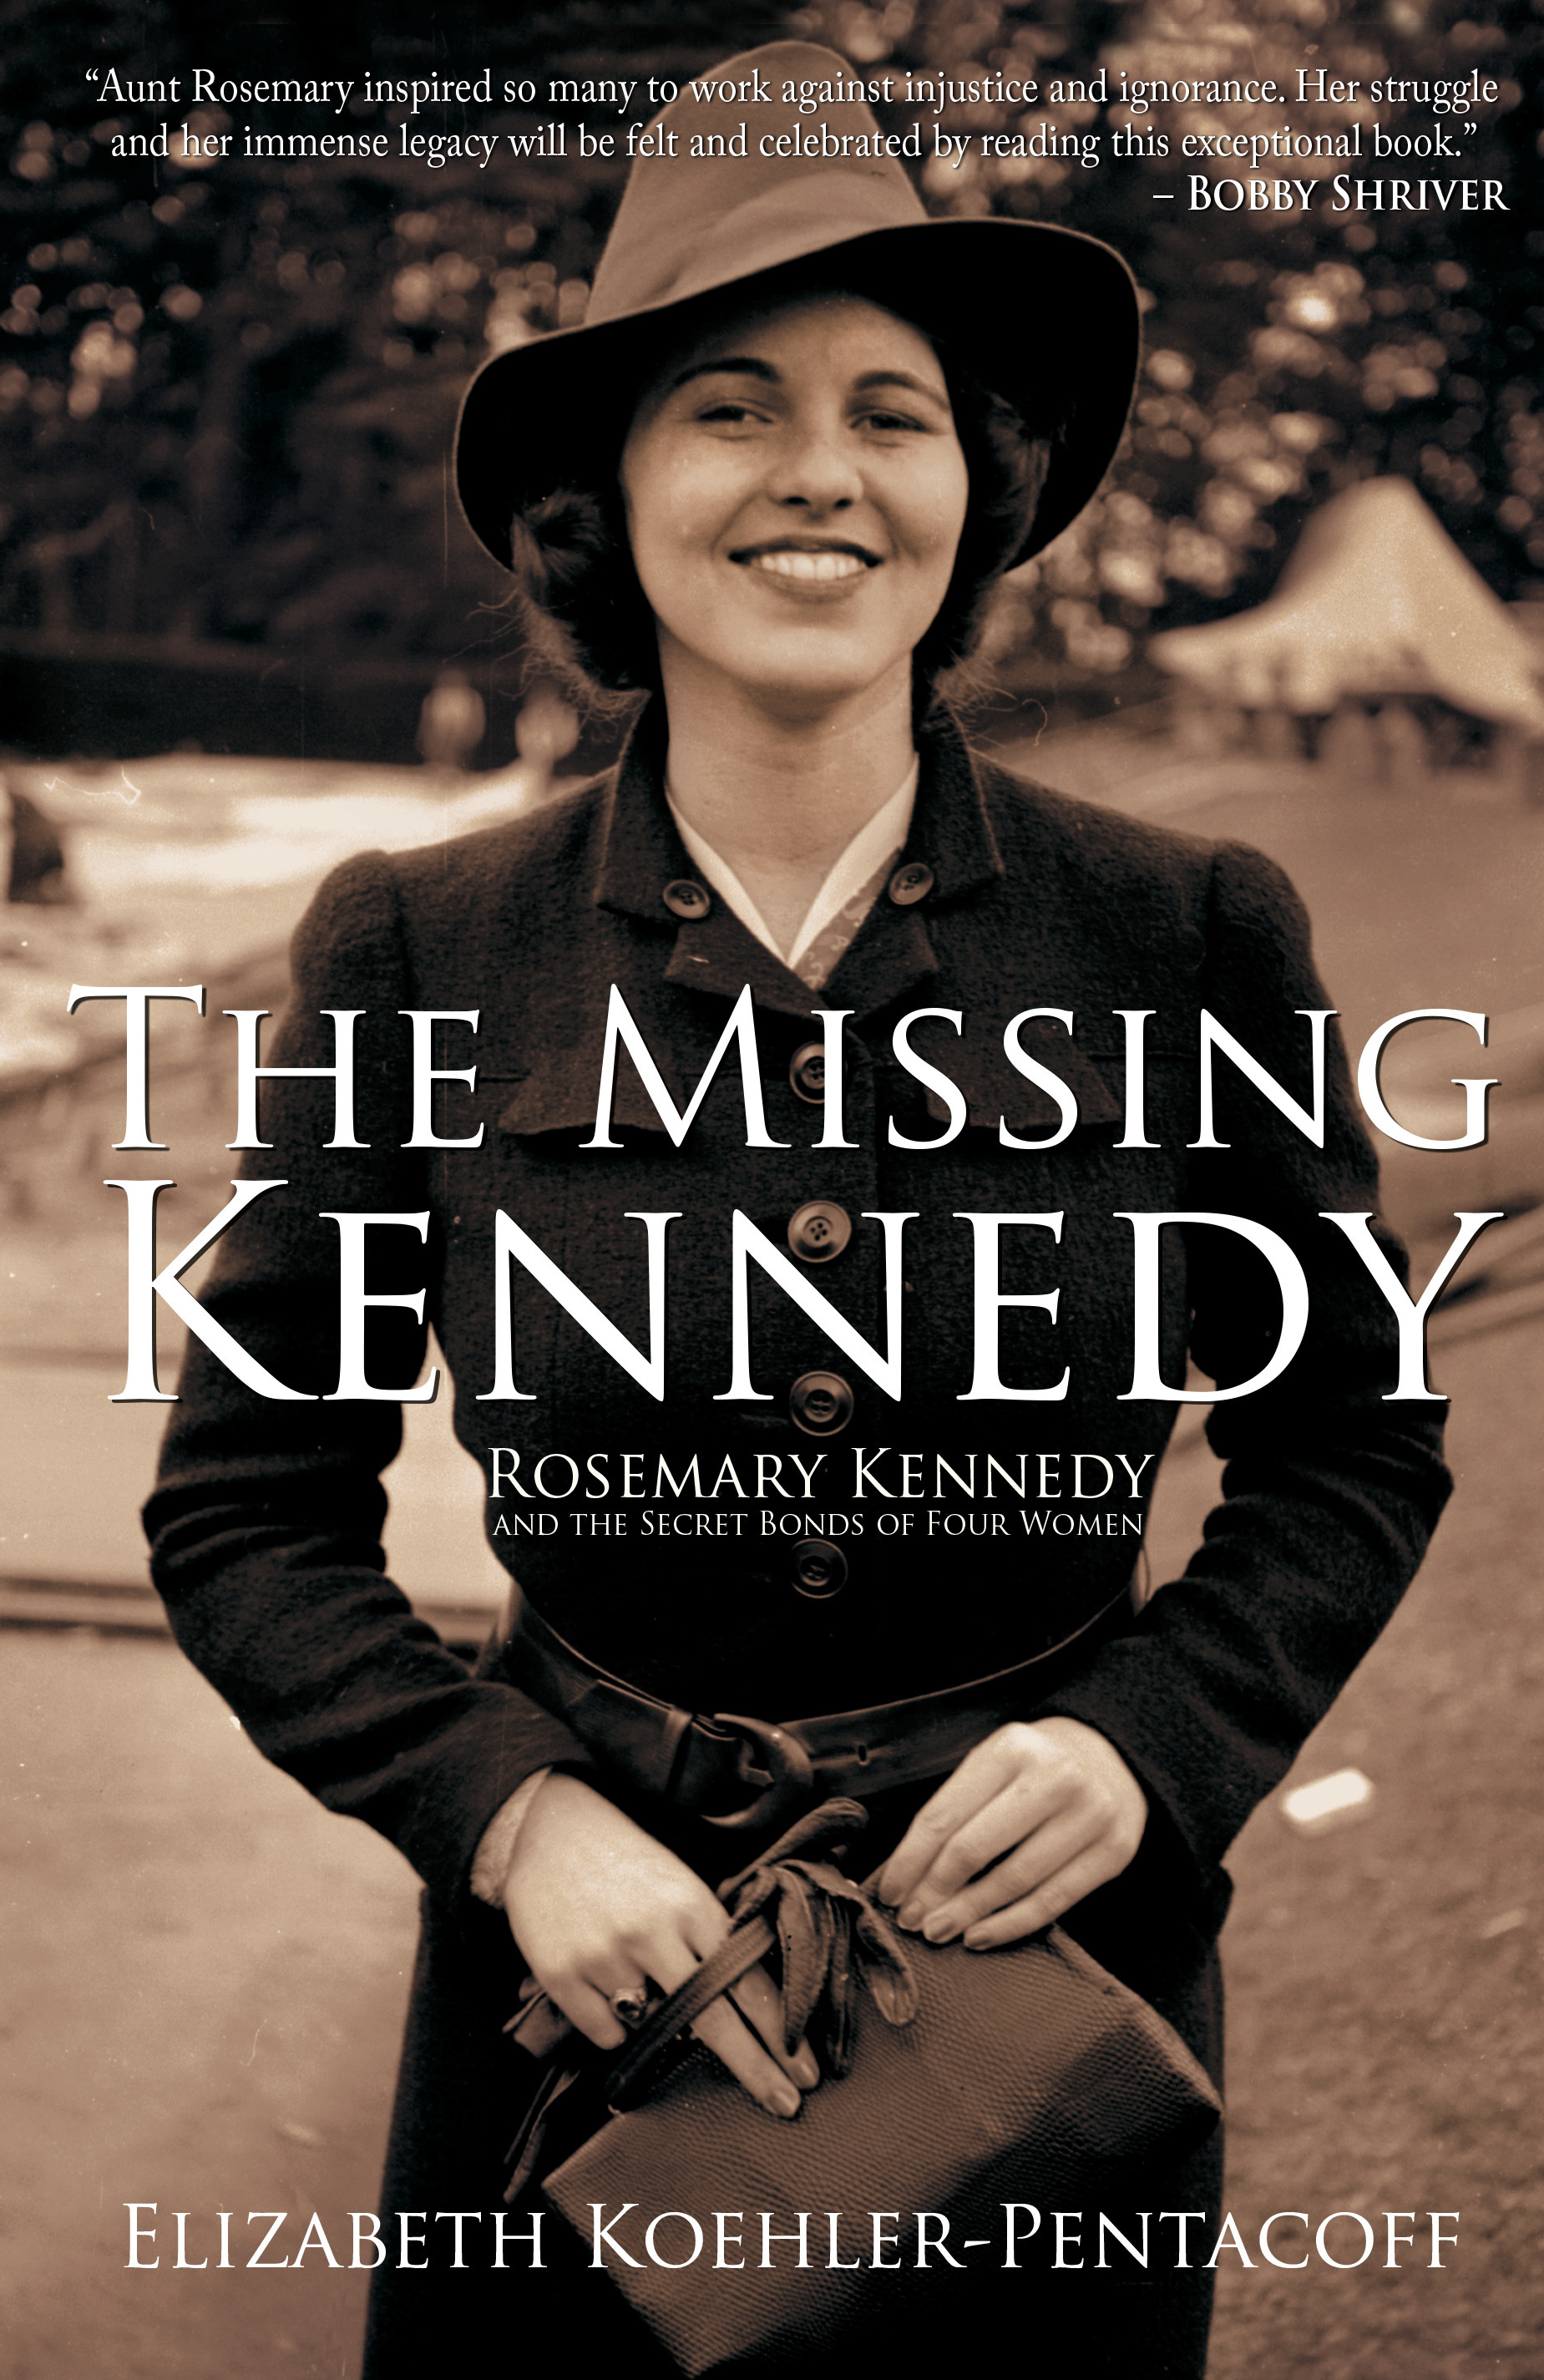 The Missing Kennedy by Elizabeth Koehler-Pentacoff